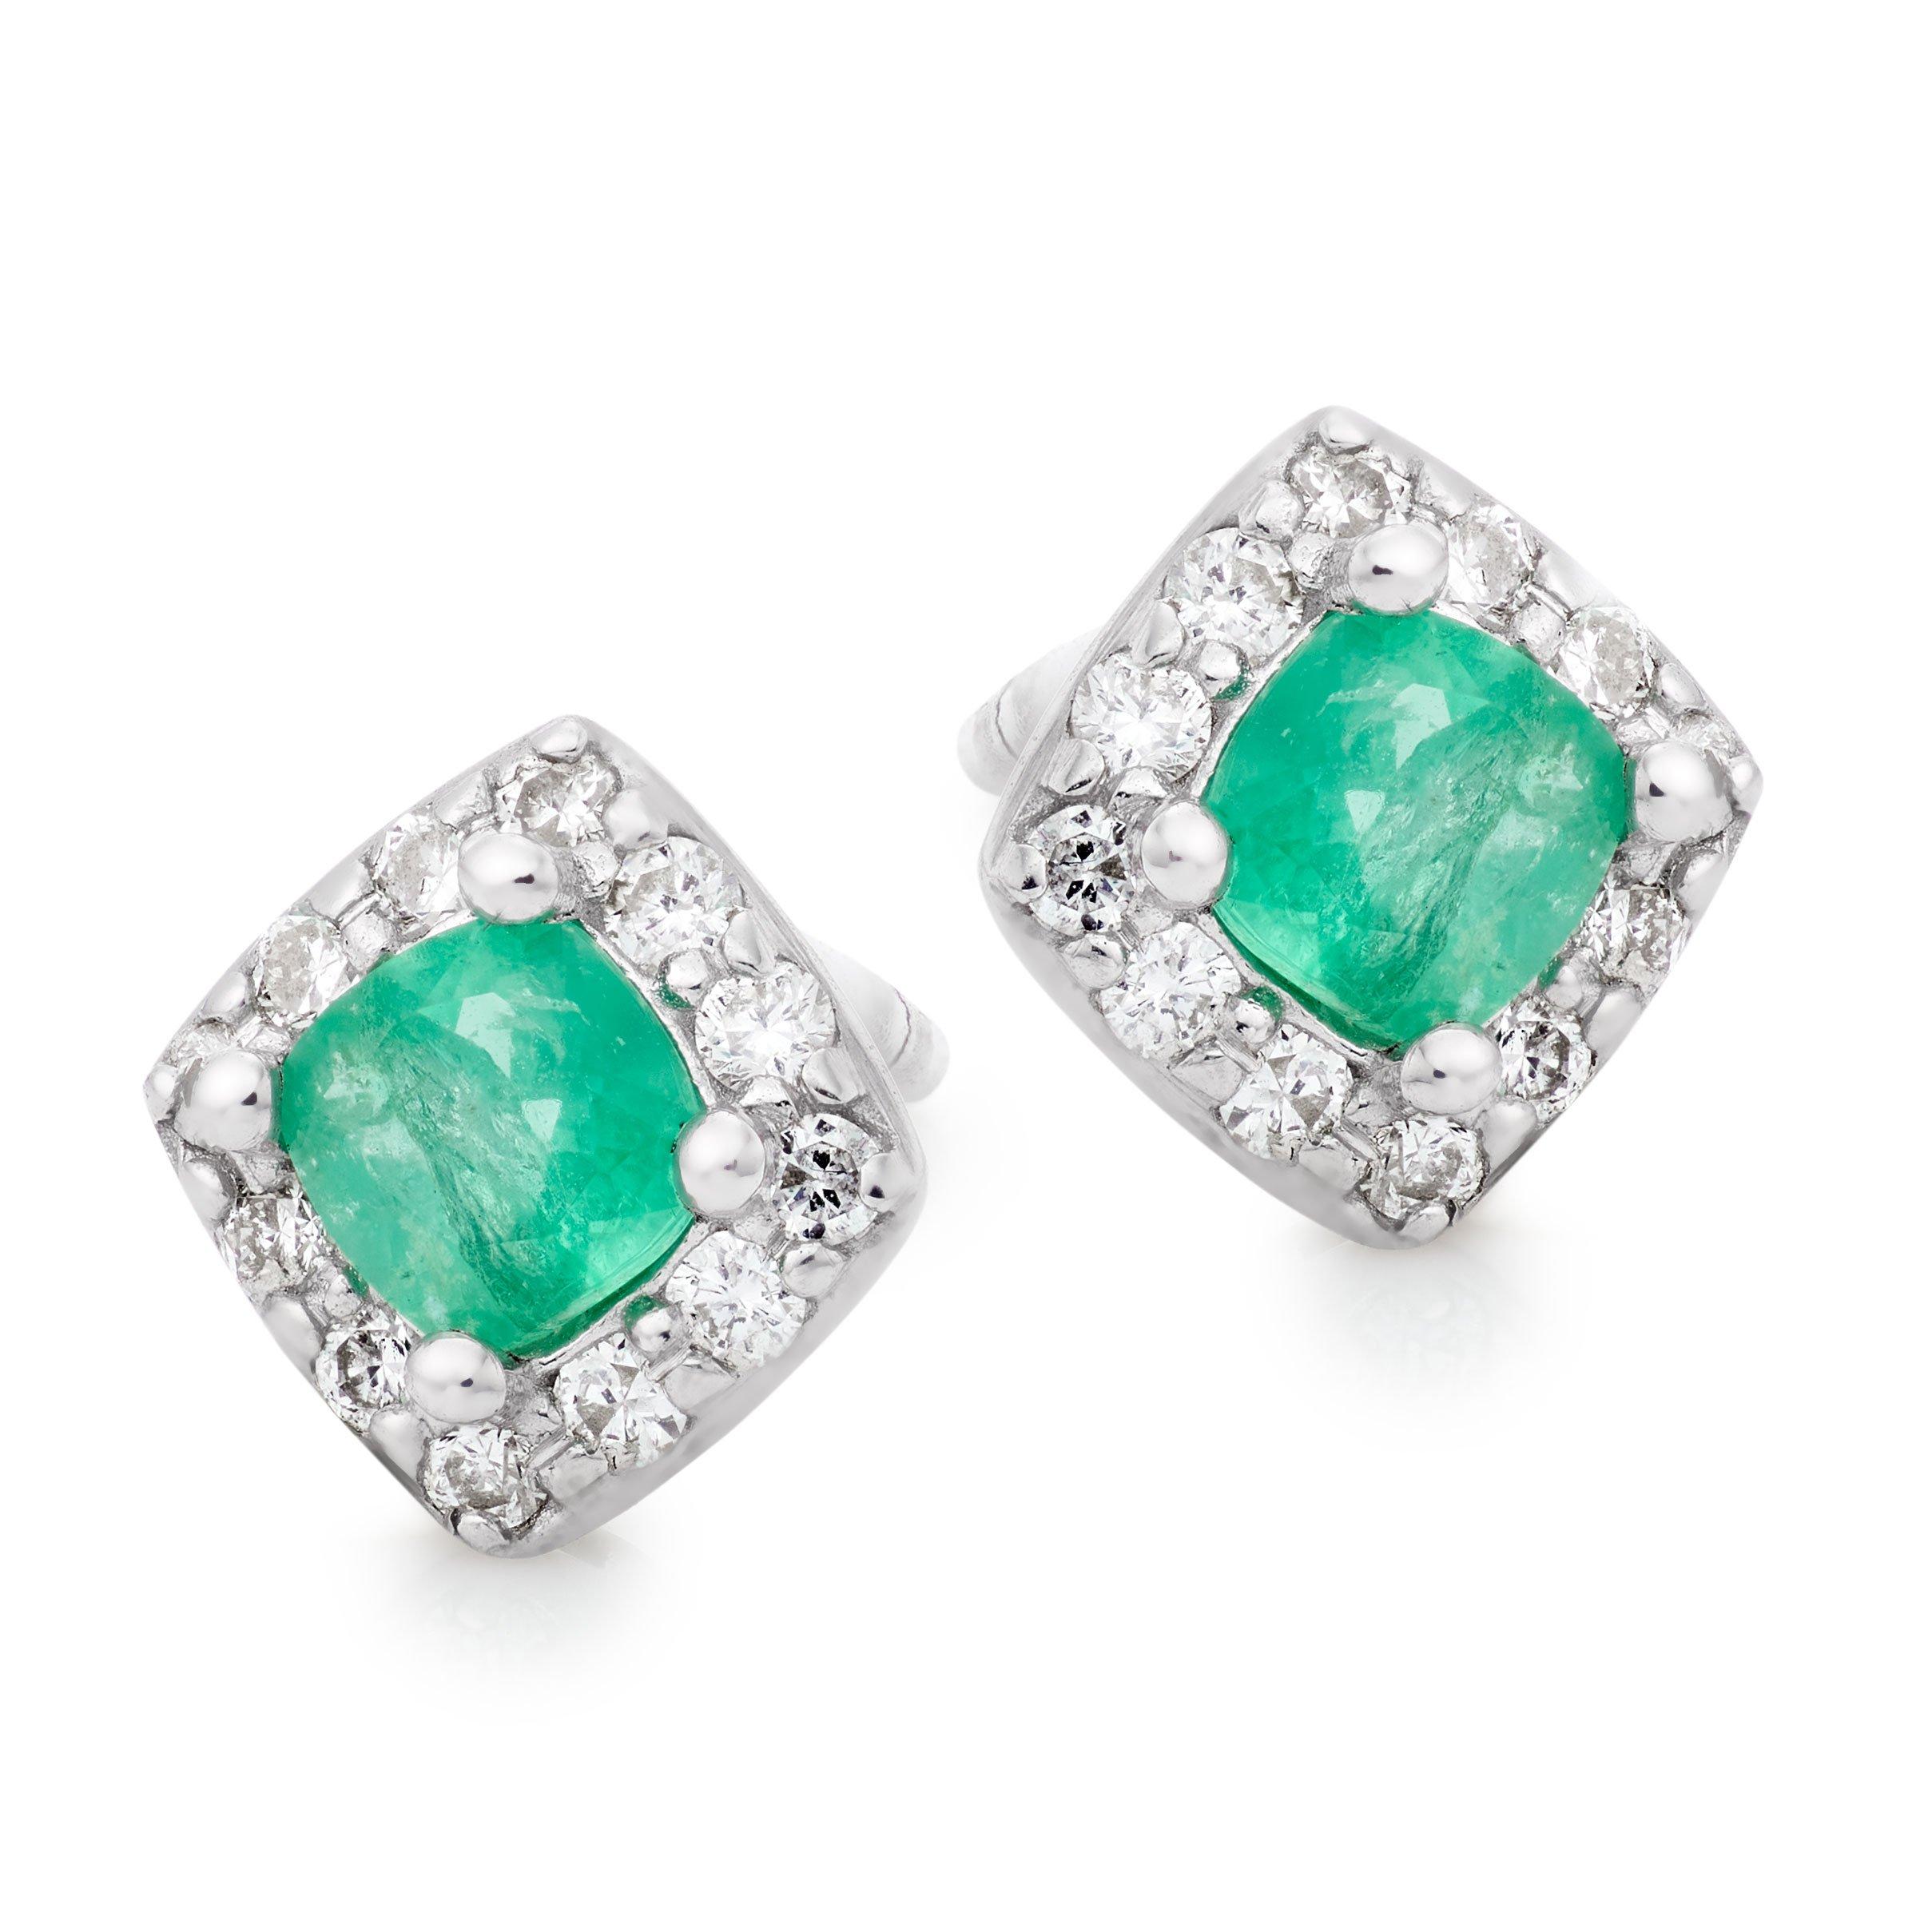 9ct White Gold Diamond Emerald Stud Earrings | 0132481 | Beaverbrooks ...